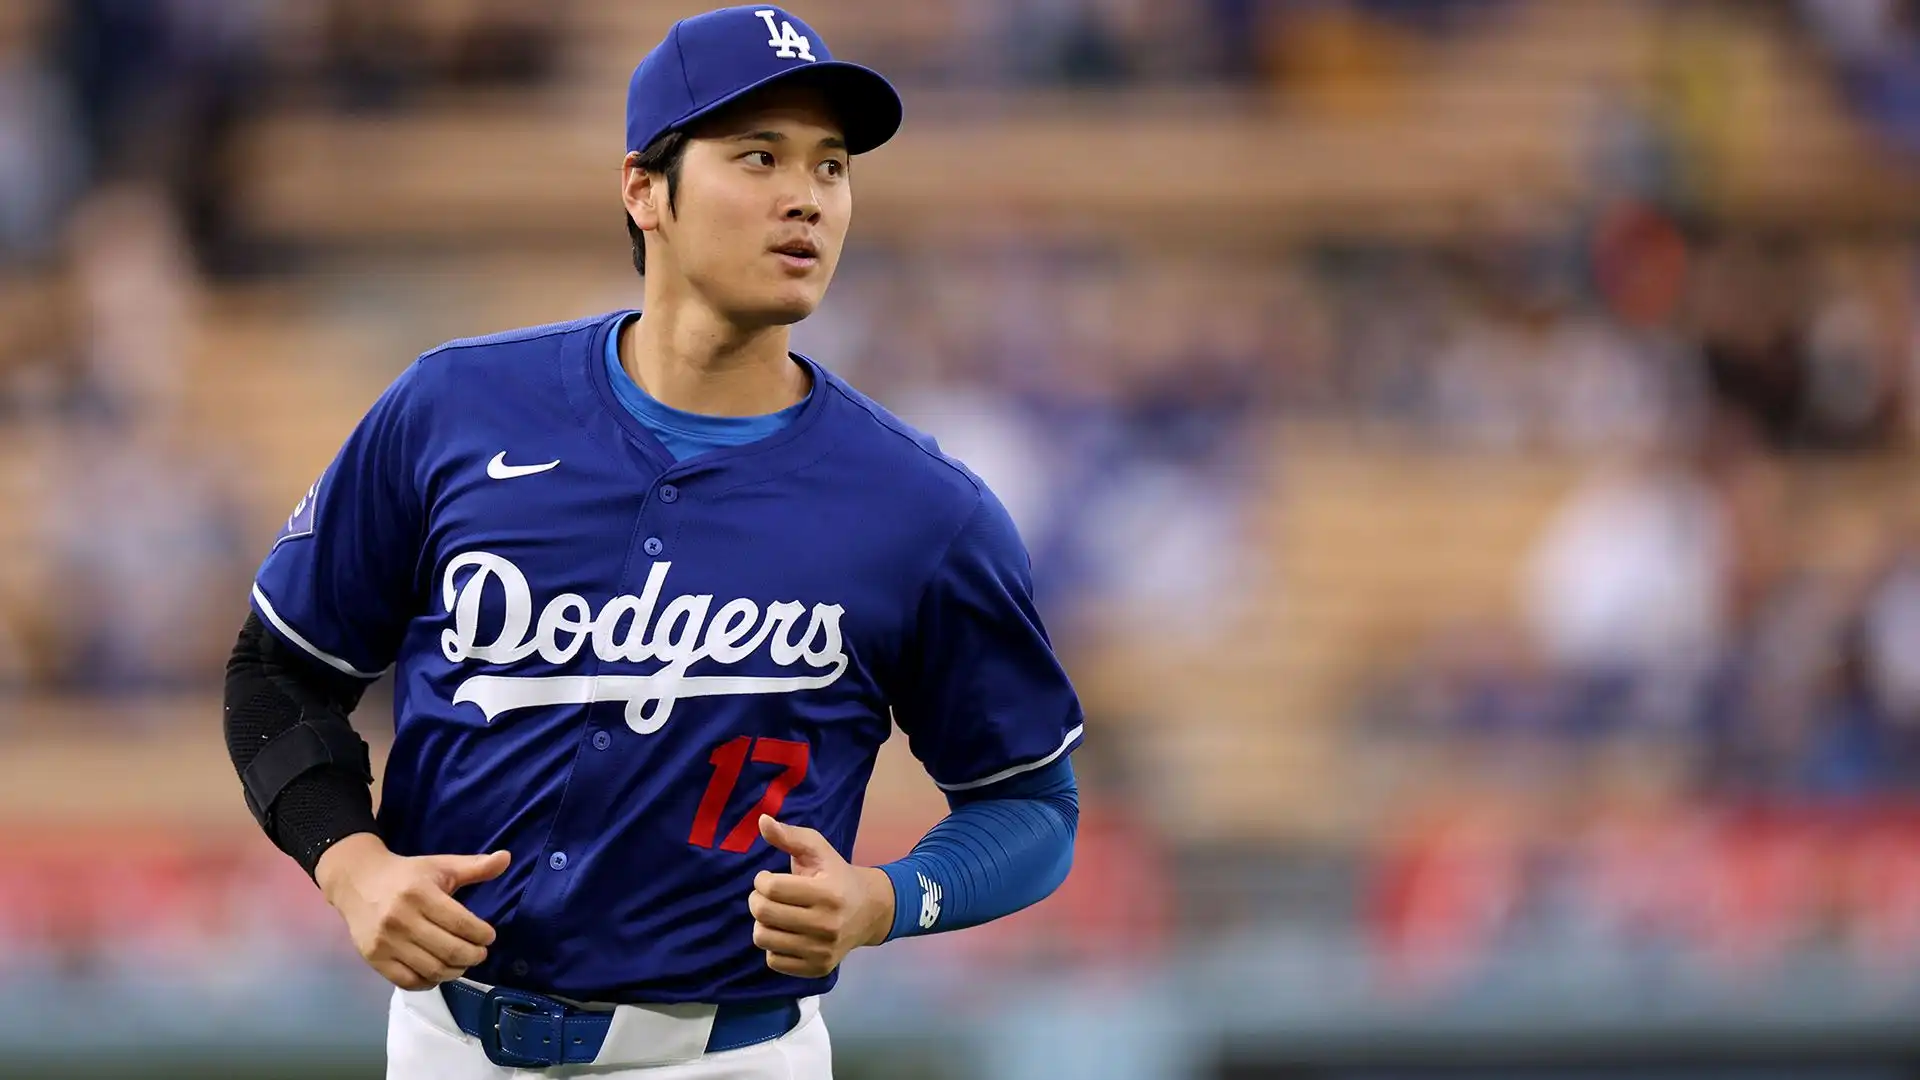 1 Shohei Ohtani (Los Angeles Dodgers): totale guadagni $67M